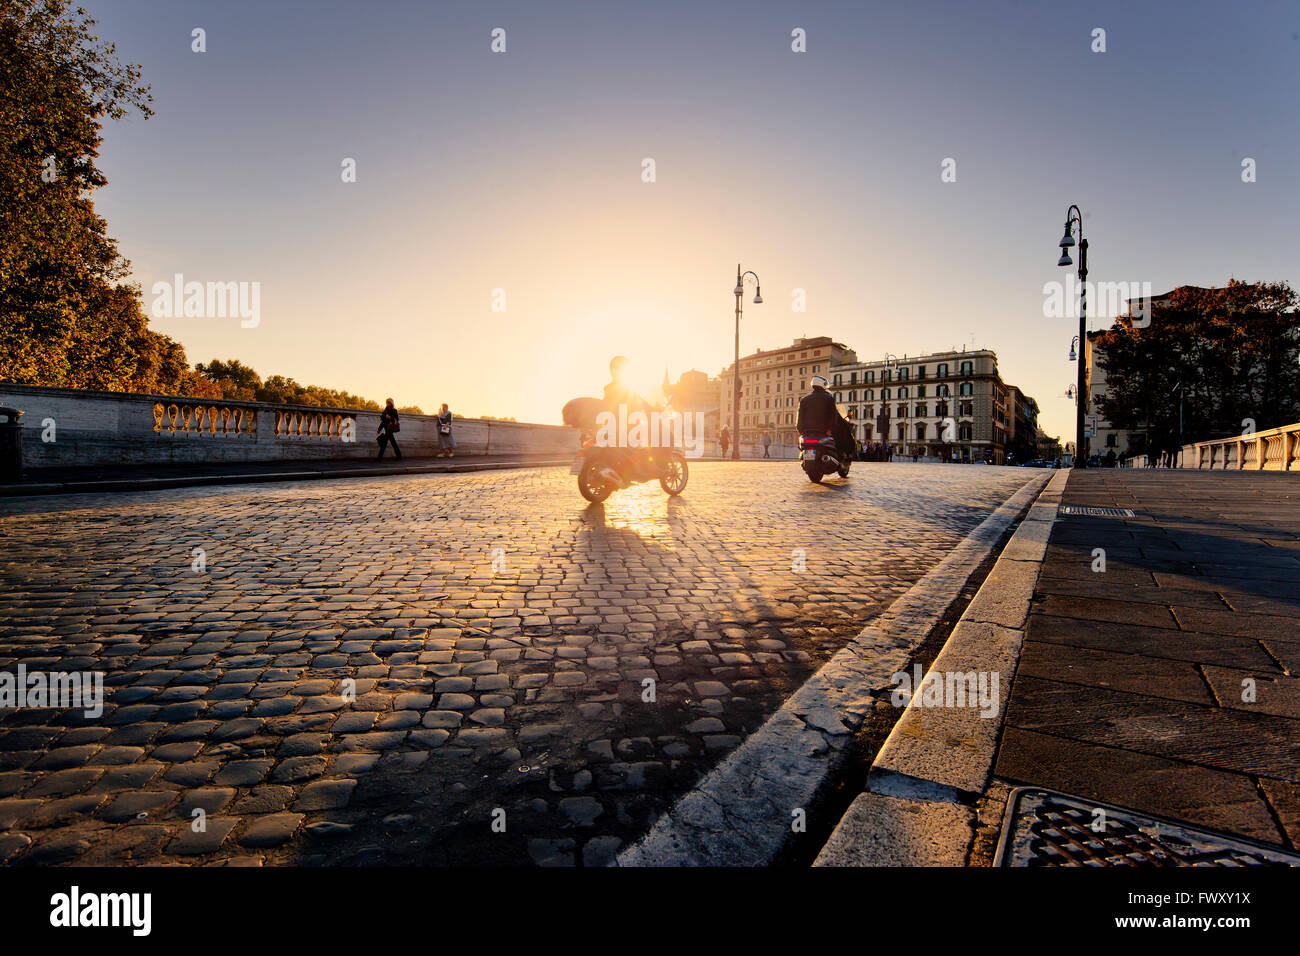 Italy, Rome, Motor scooters on cobblestone street at dusk Stock Photo